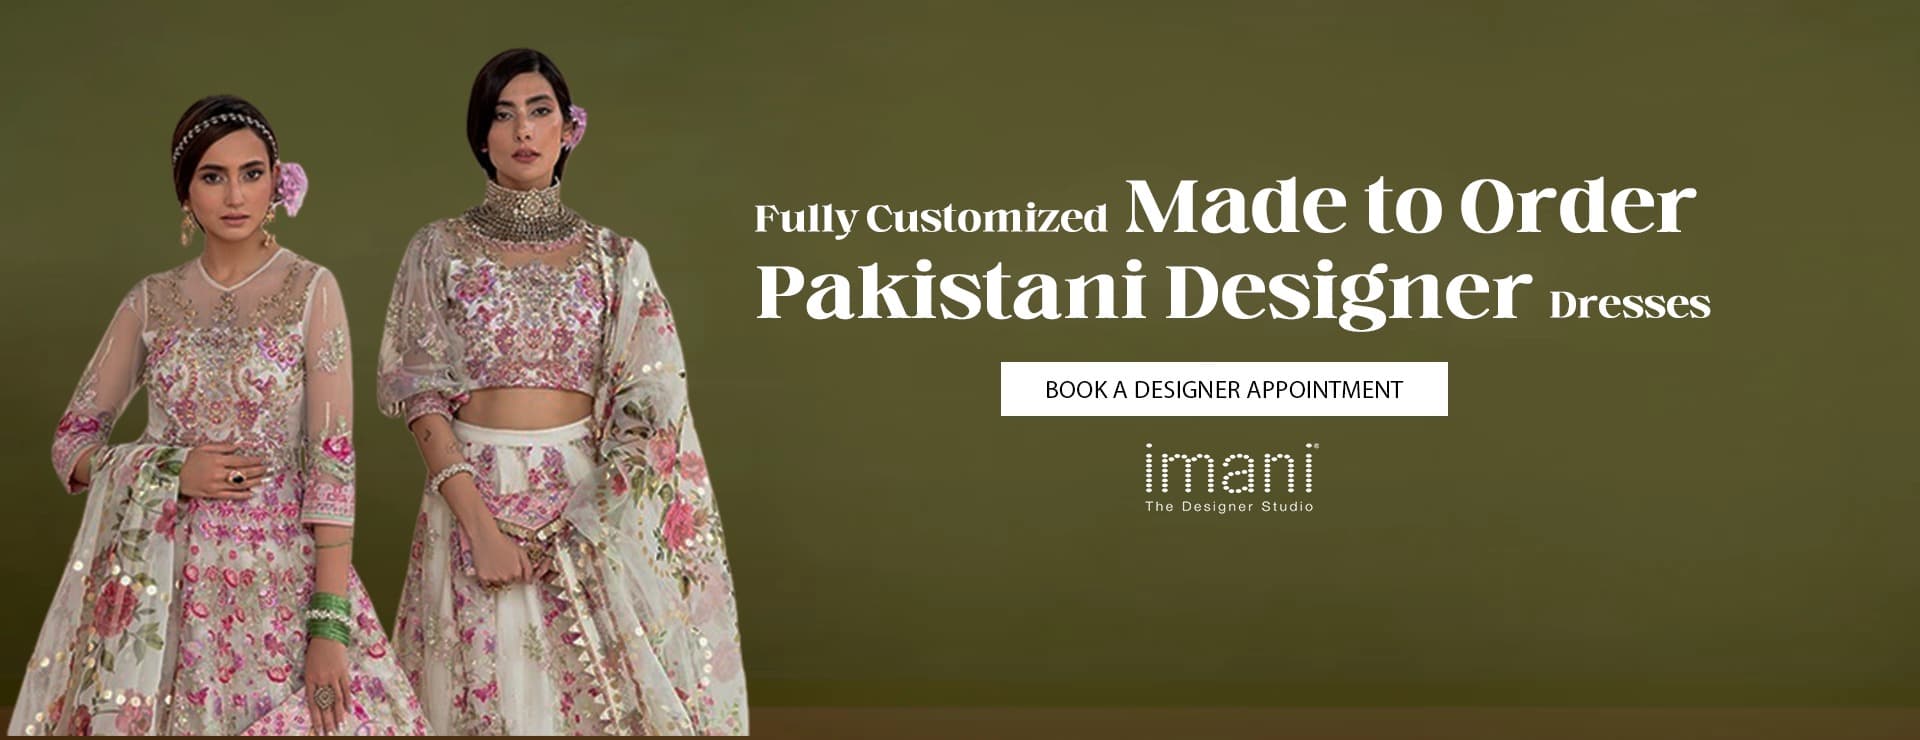 Pakistani Bridal And Cotoure Dress 1 Imanistudio.com